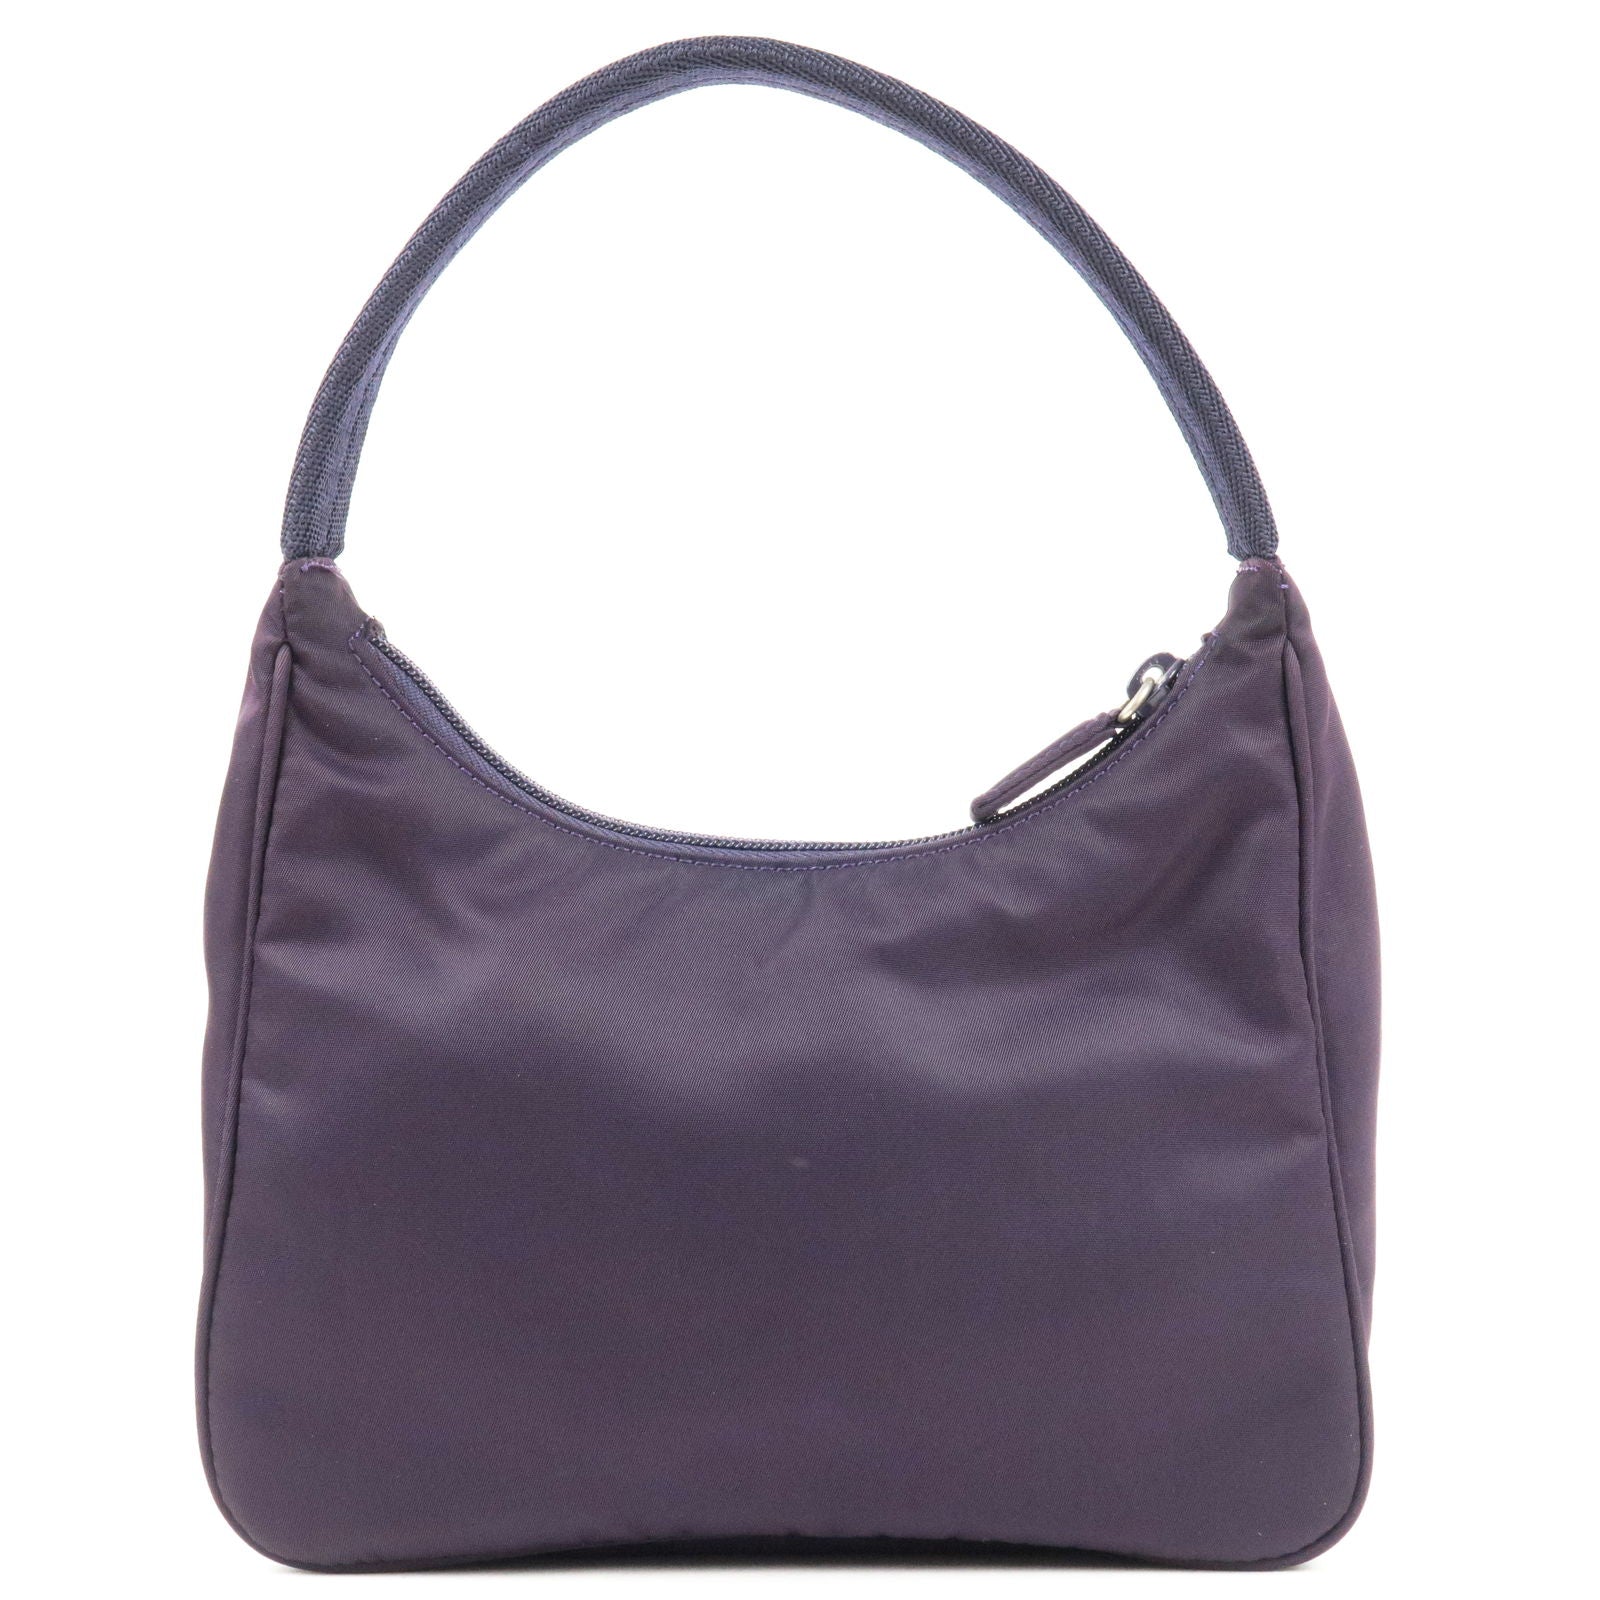 Prada Vitello Daino Tote Melanzana Bag - Purple - Pre-owned | eBay